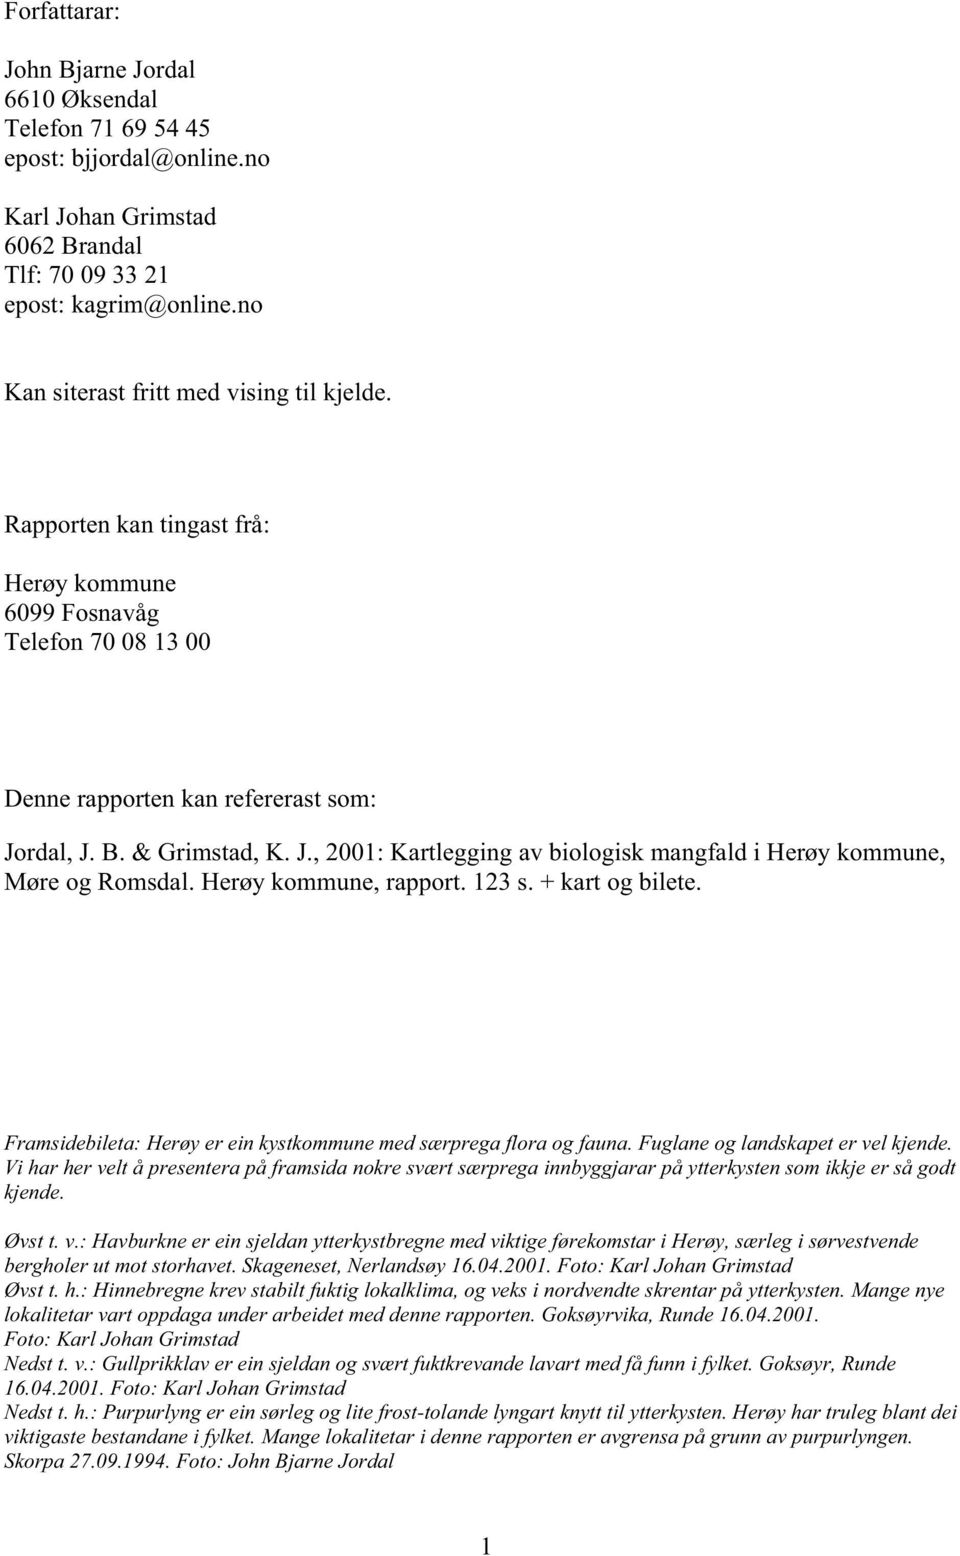 rdal, J. B. & Grimstad, K. J., 2001: Kartlegging av biologisk mangfald i Herøy kommune, Møre og Romsdal. Herøy kommune, rapport. 123 s. + kart og bilete.